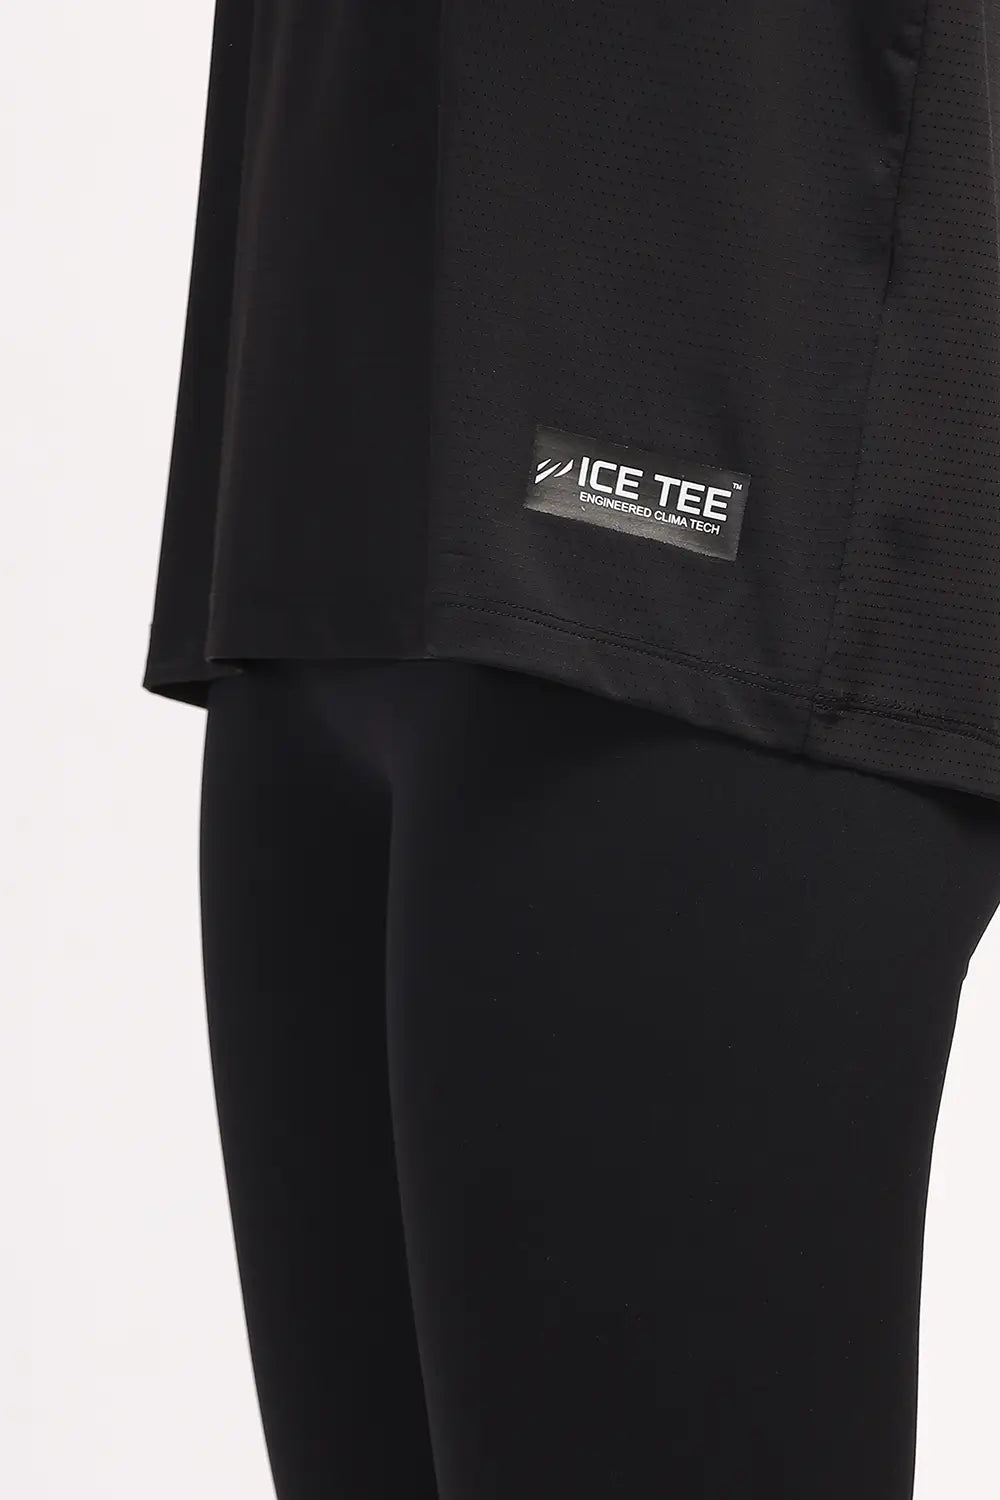 Women's Ice Tee - 100X Cooler than your regular T-shirt